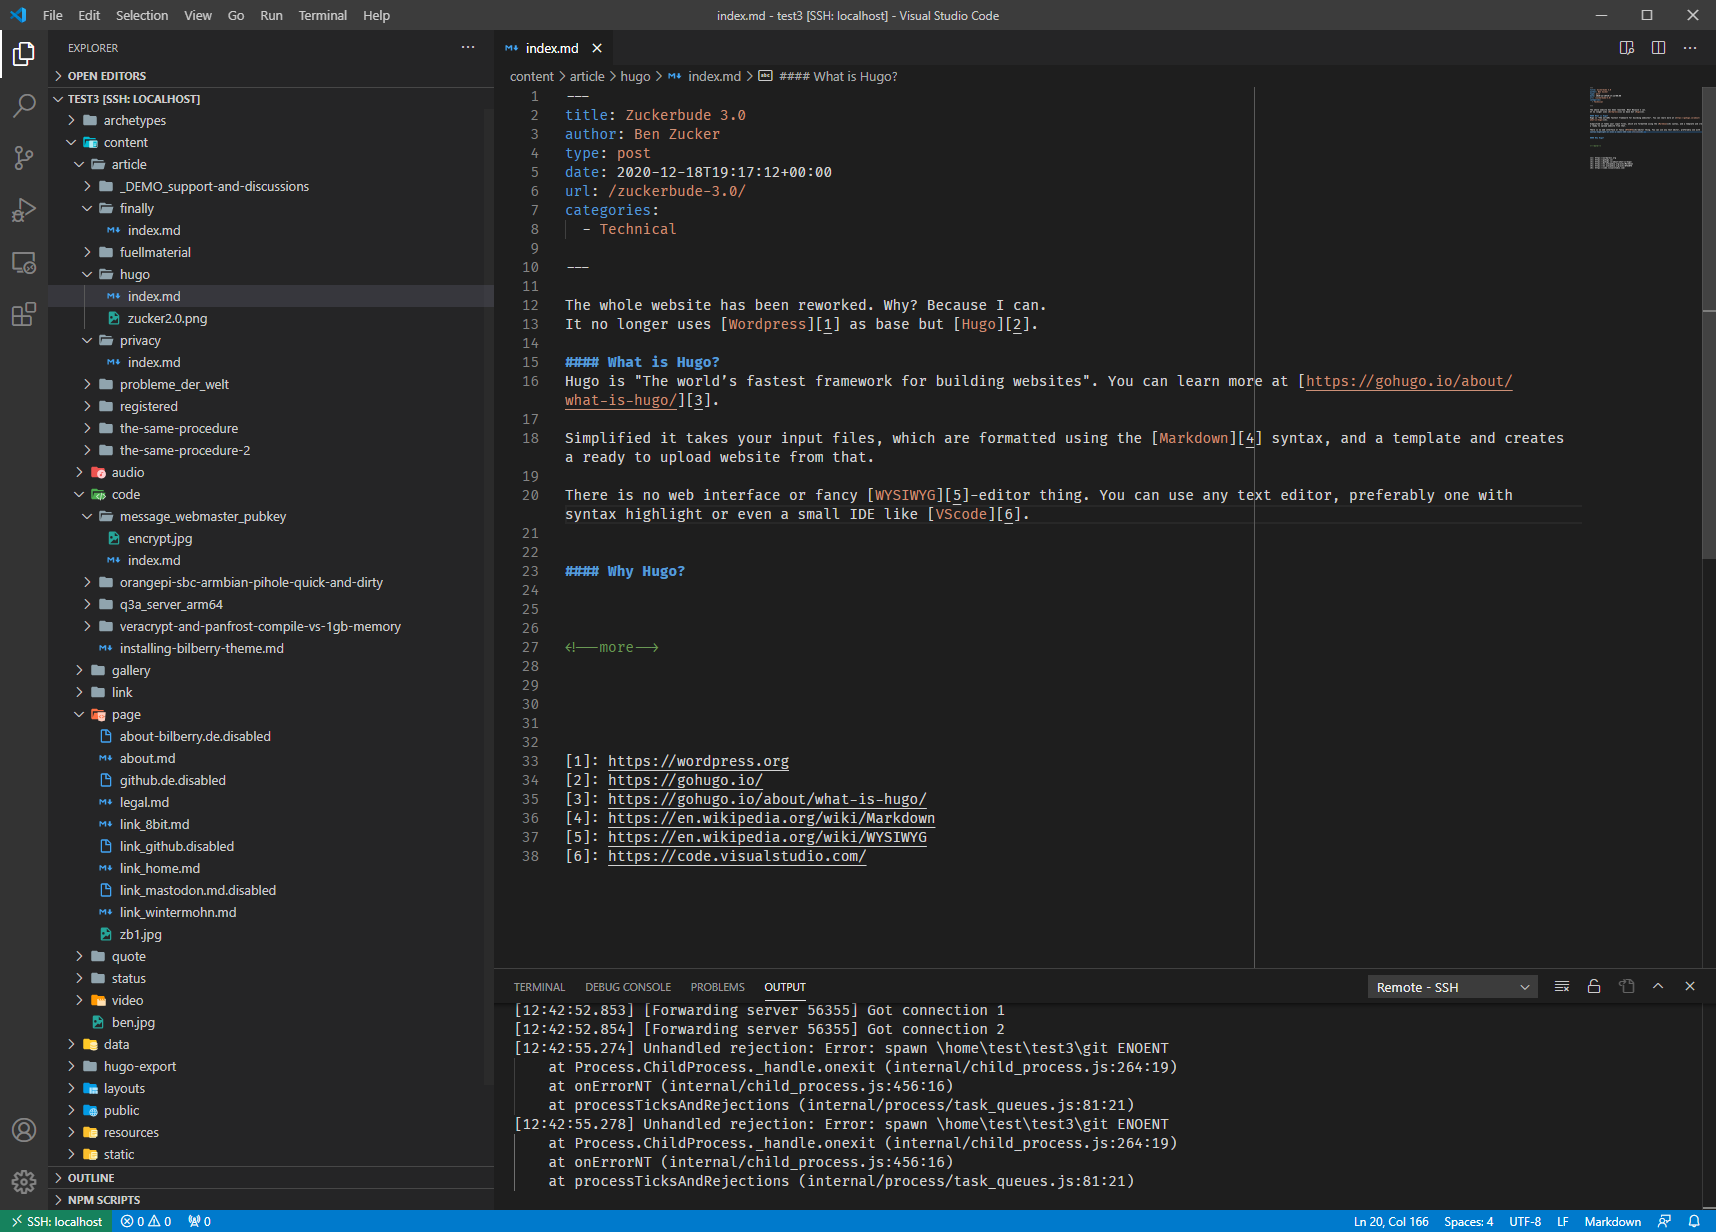 Visual Studio Code editing my website